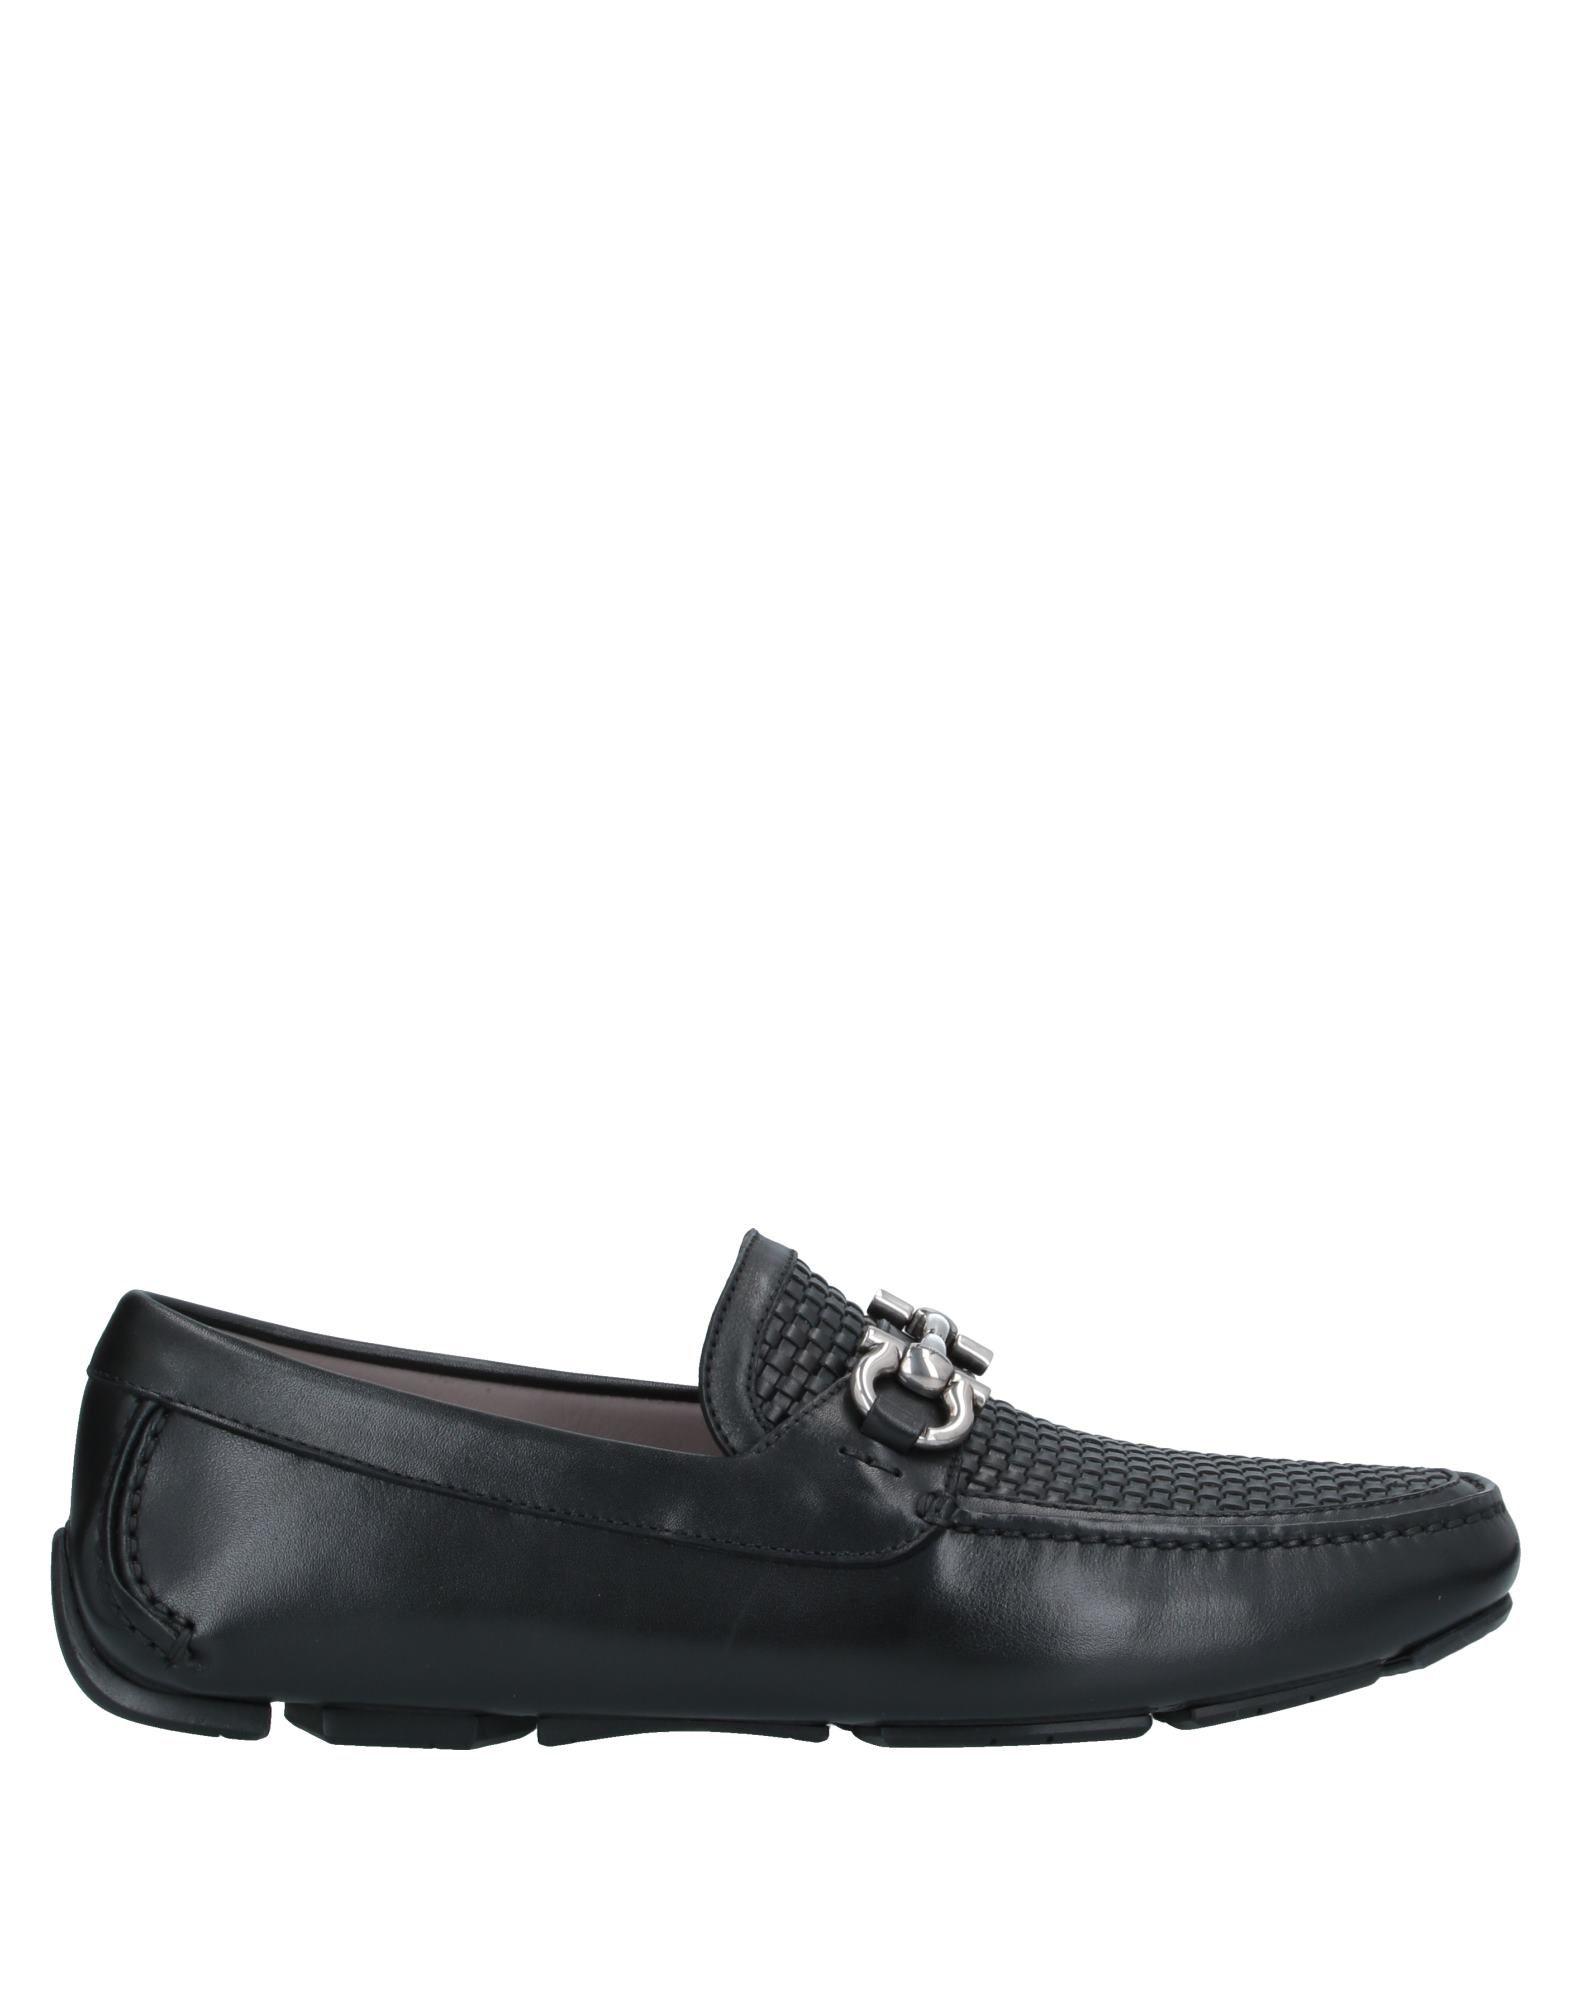 Ferragamo Leather Loafer in Black for Men - Lyst